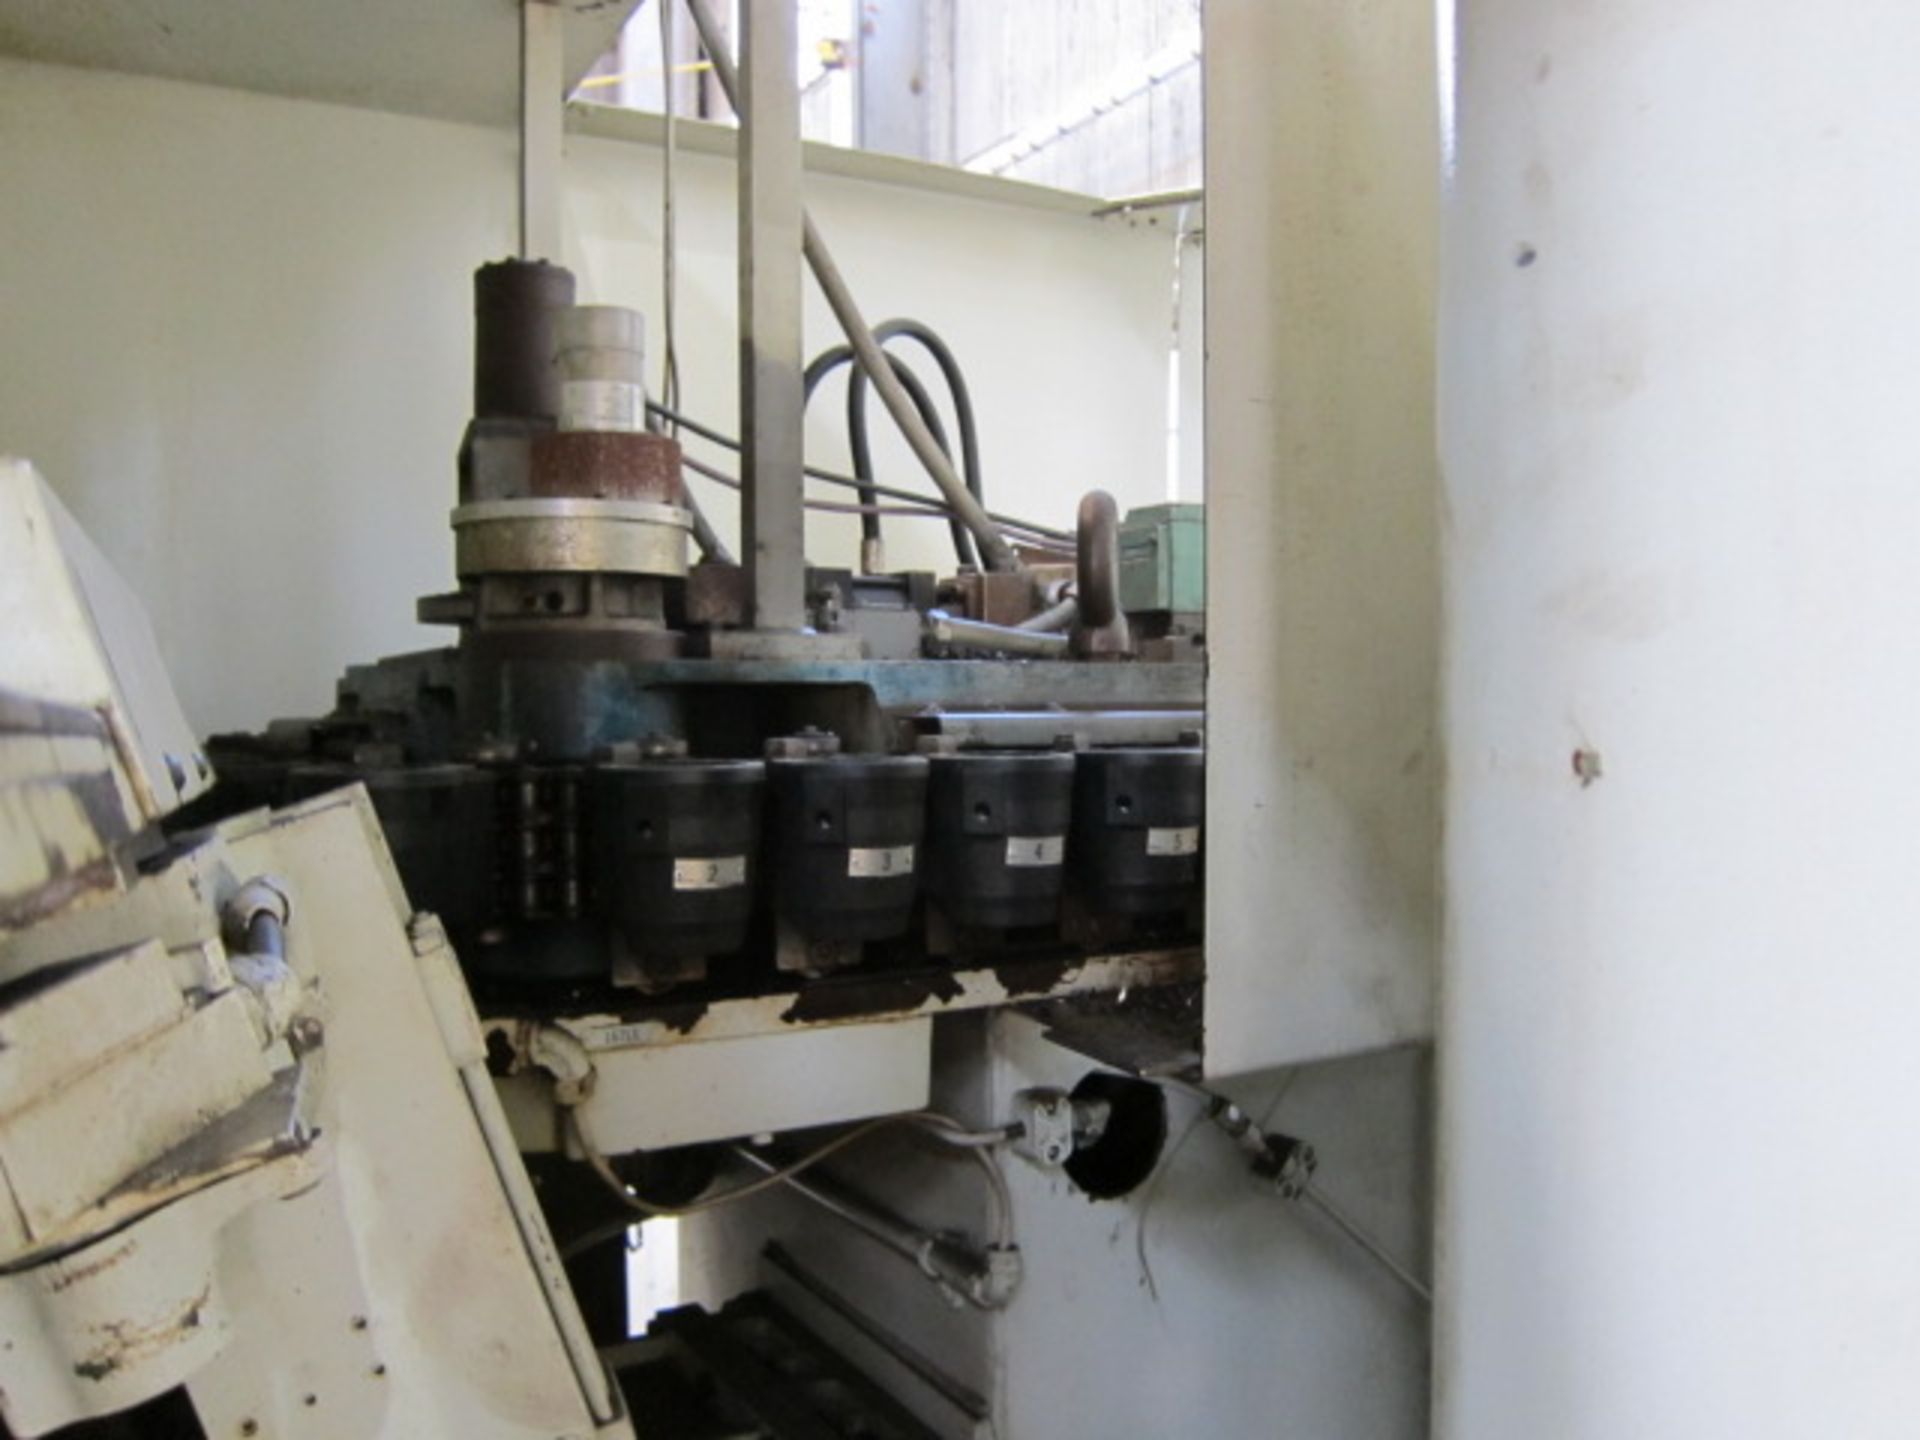 CNC FLOOR TYPE HORIZONTAL BORING MILL, GIDDINGS & LEWIS MDL. G60-FX, rebuilt & retrofitted in - Image 14 of 16